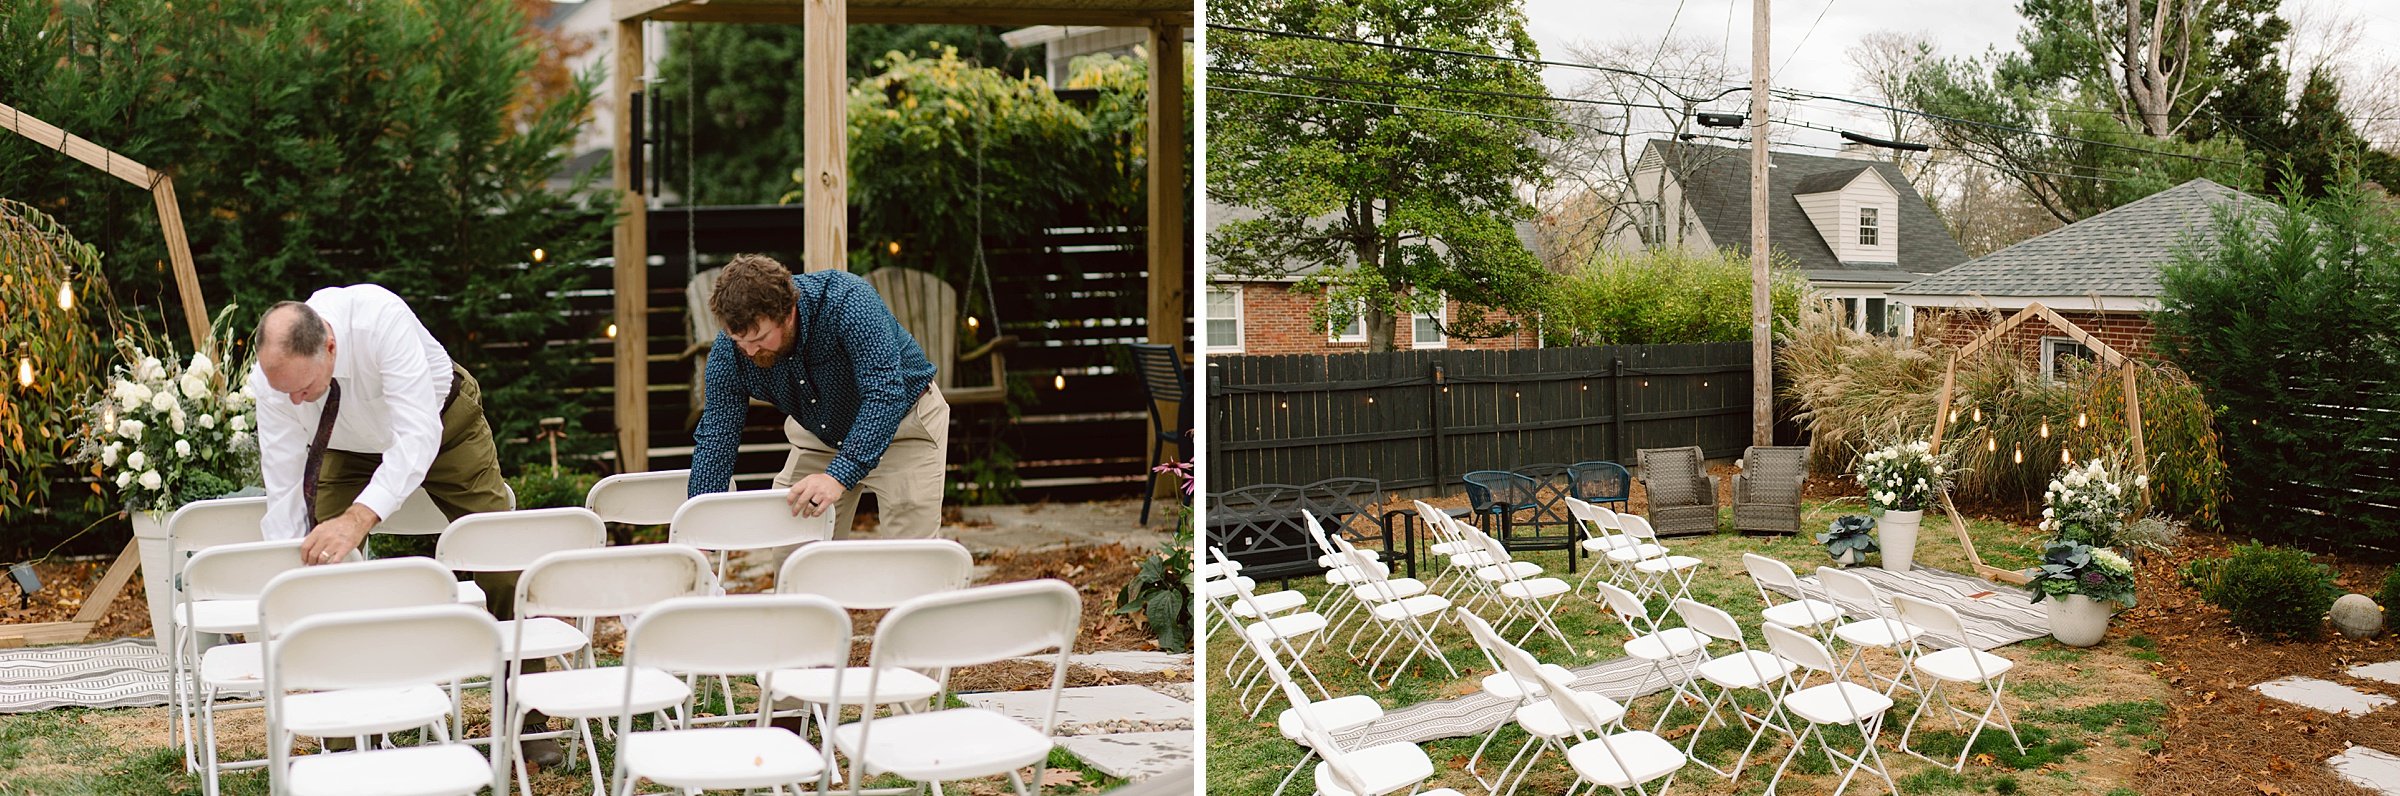 Laid-back- intimate backyard wedding in Louisville- Kentucky 006.jpg